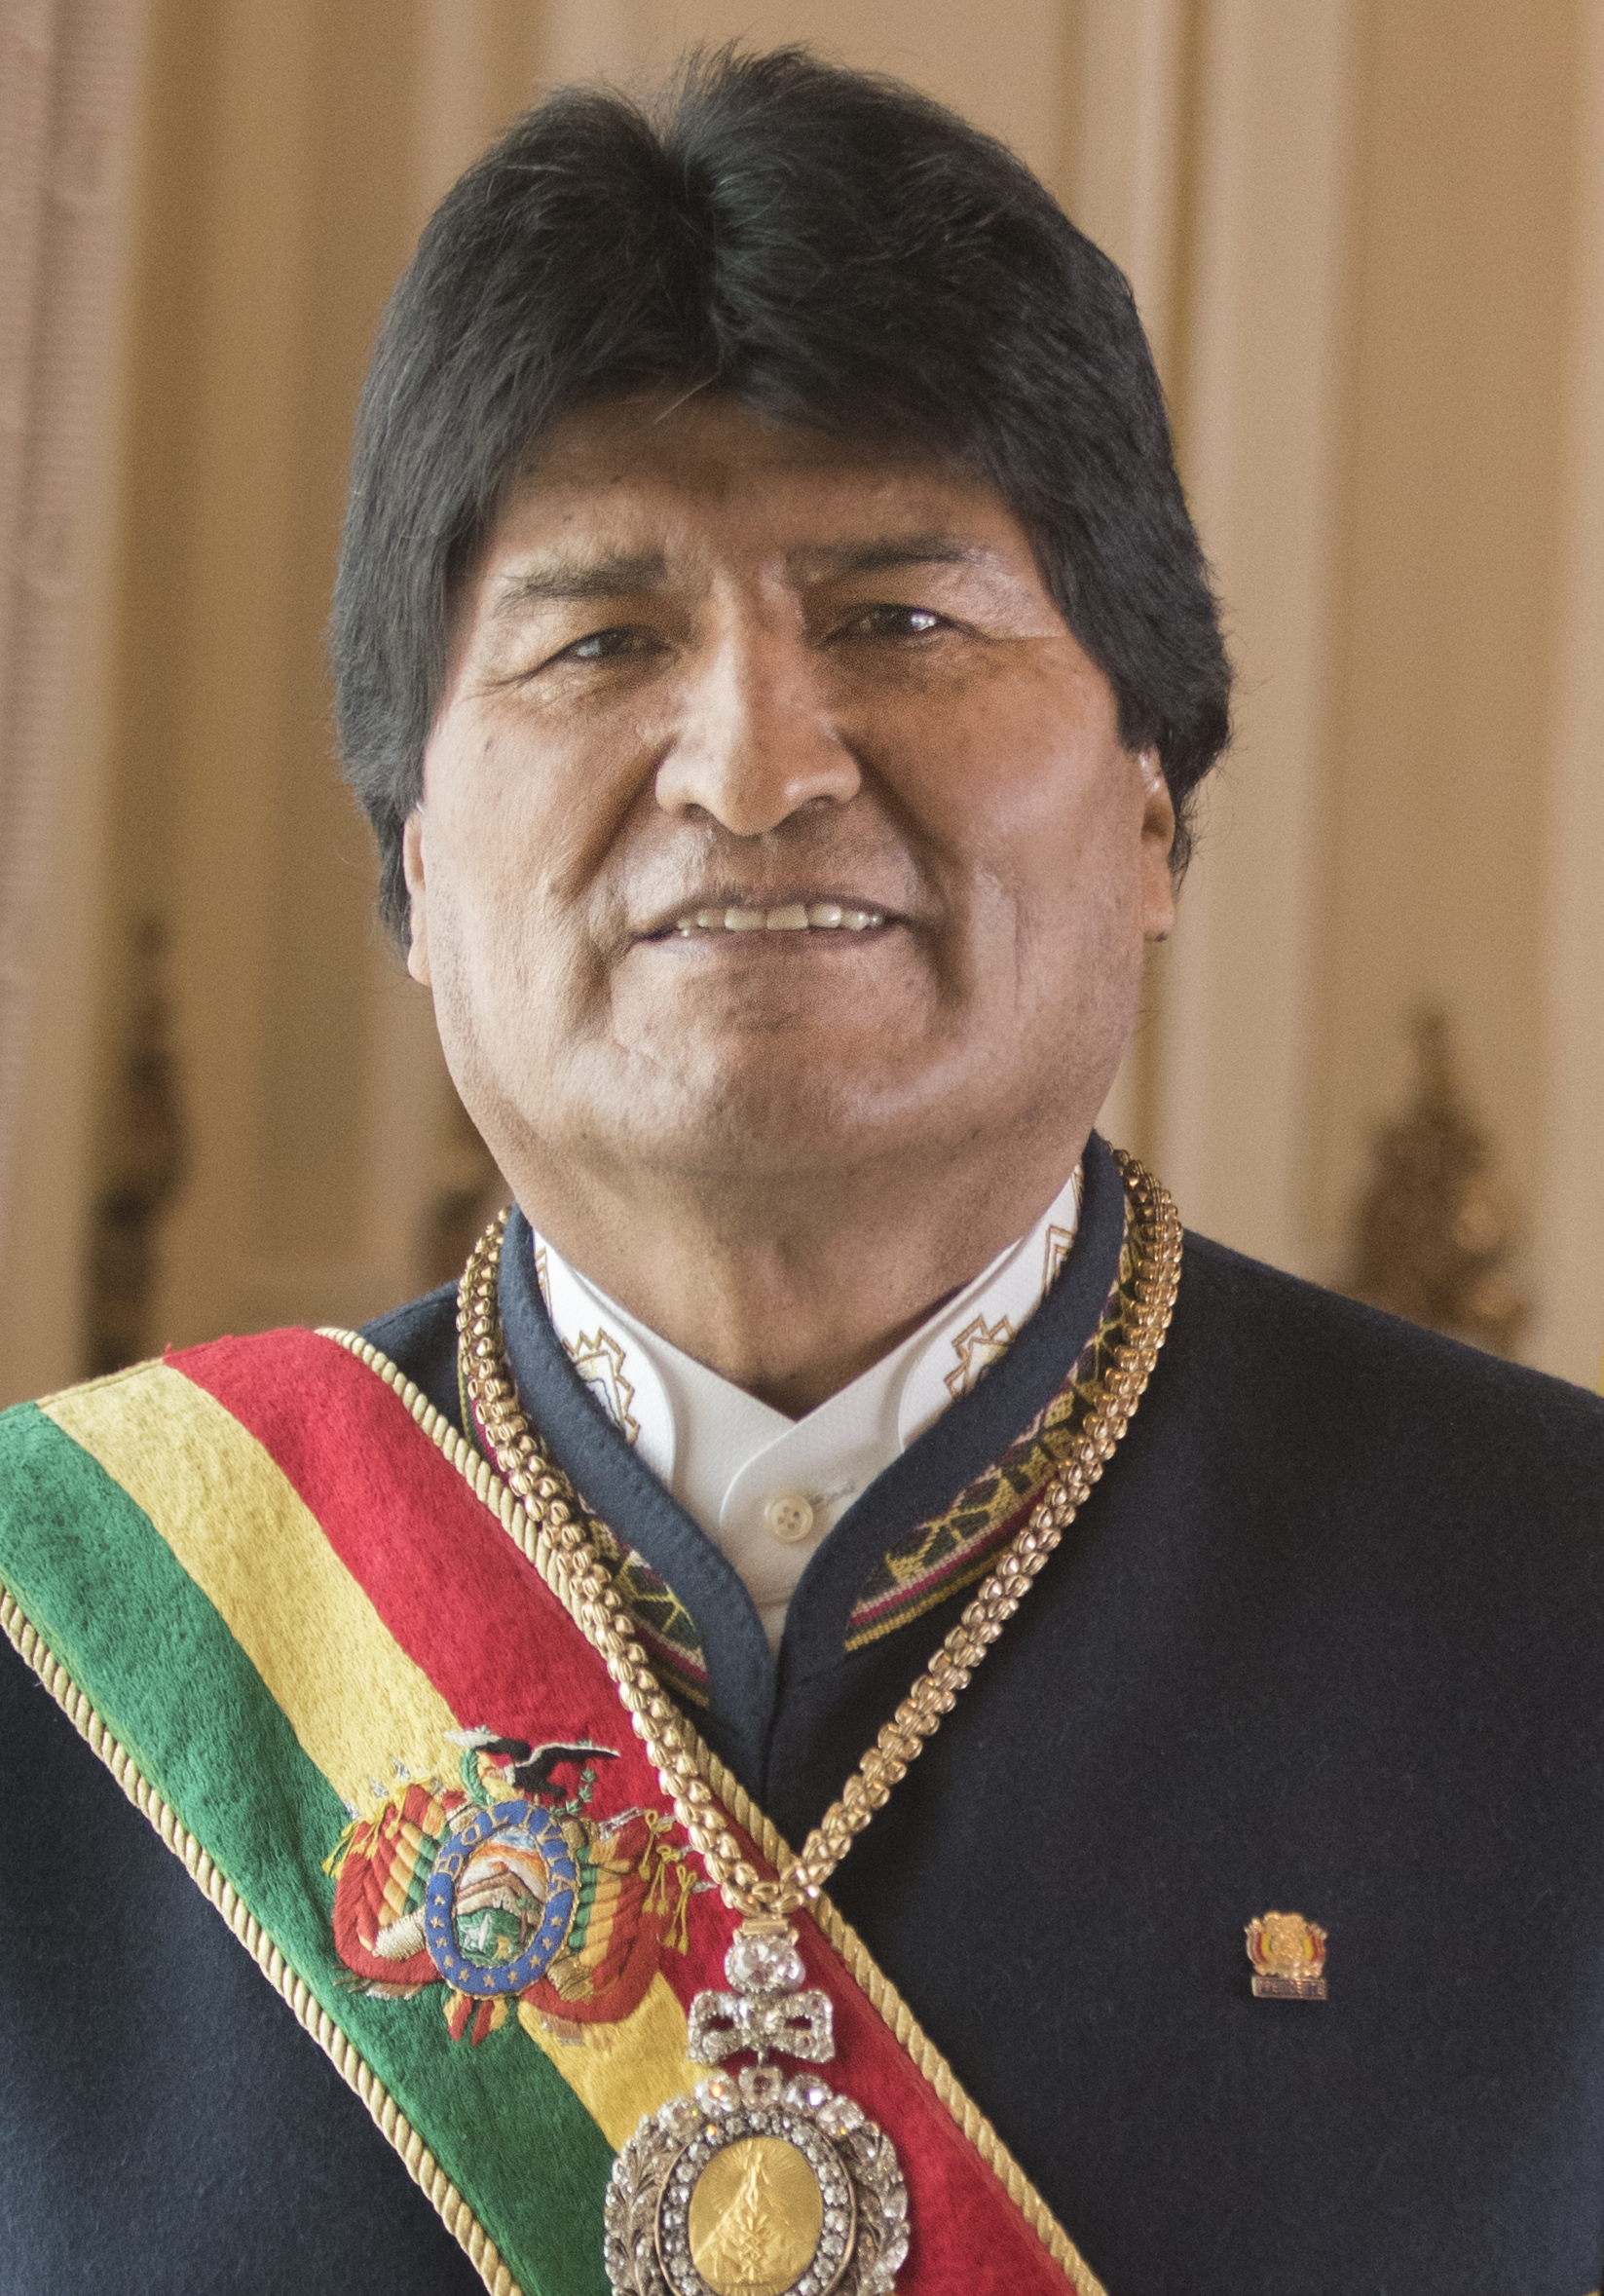 Evo Morales Ayma, former president of Bolivia